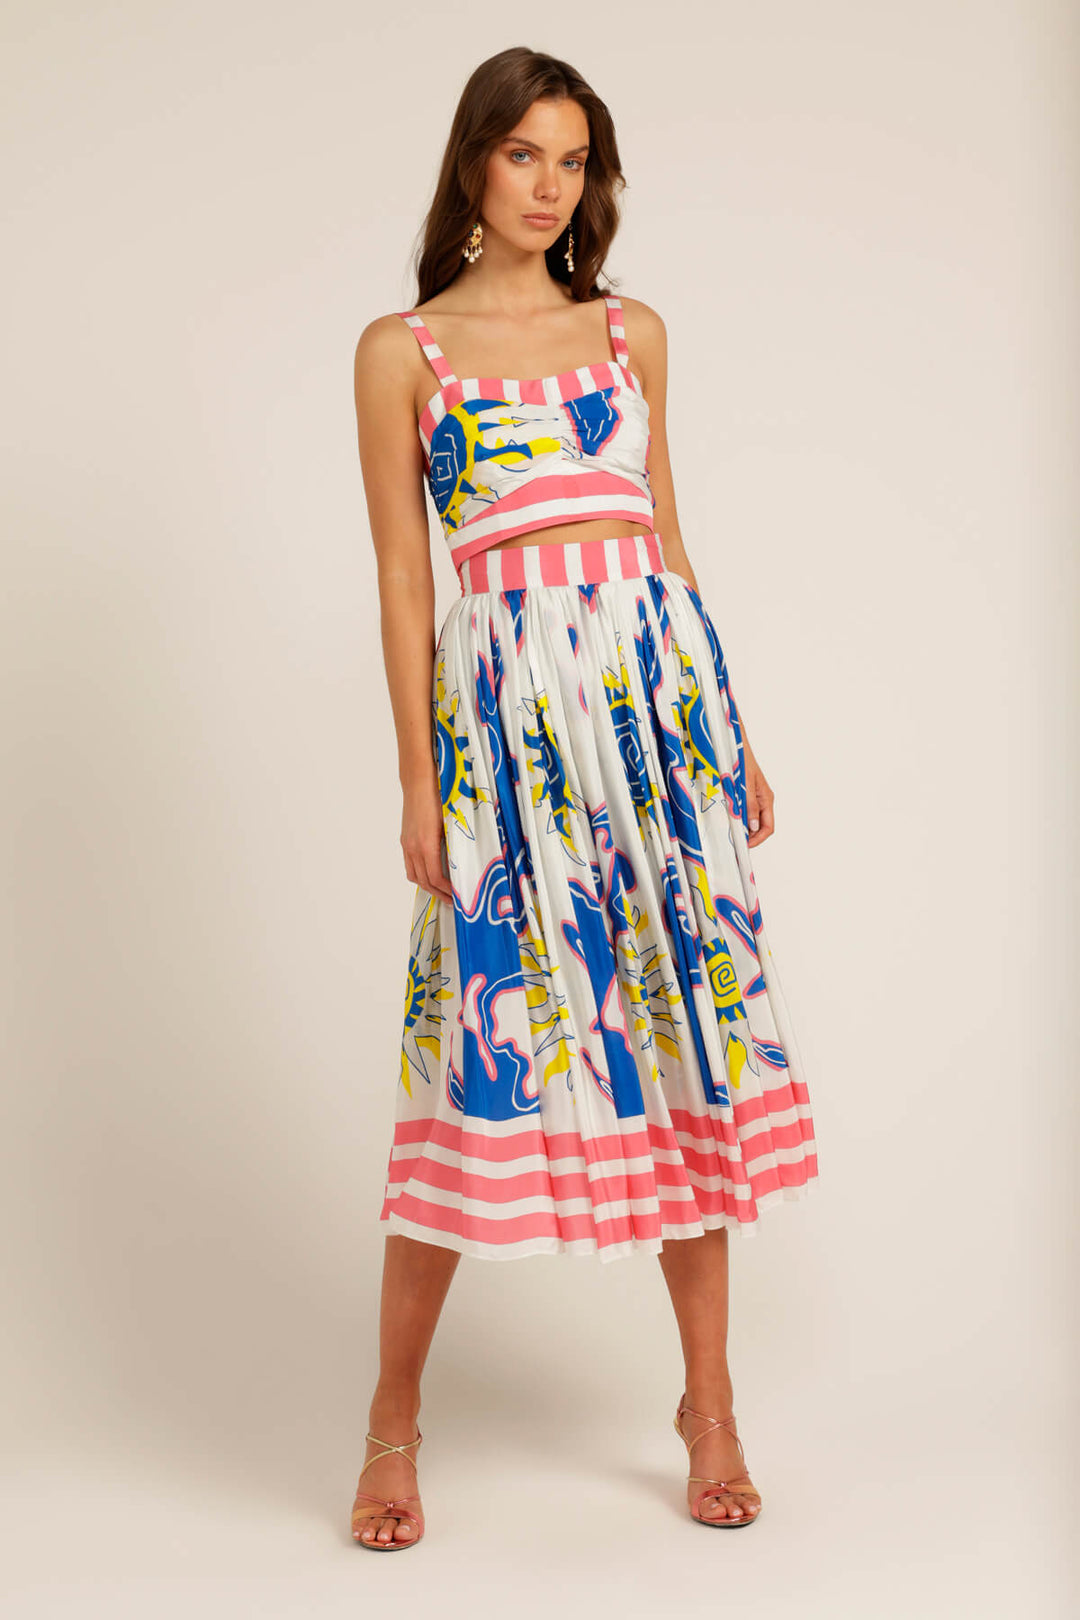 Love Bonfire The Label | Blue Yellow Abstract Sun Print Pink Stripe Gathered Pleated Midi Skirt | Great Southern Land Skirt | Australian Womens Fashion